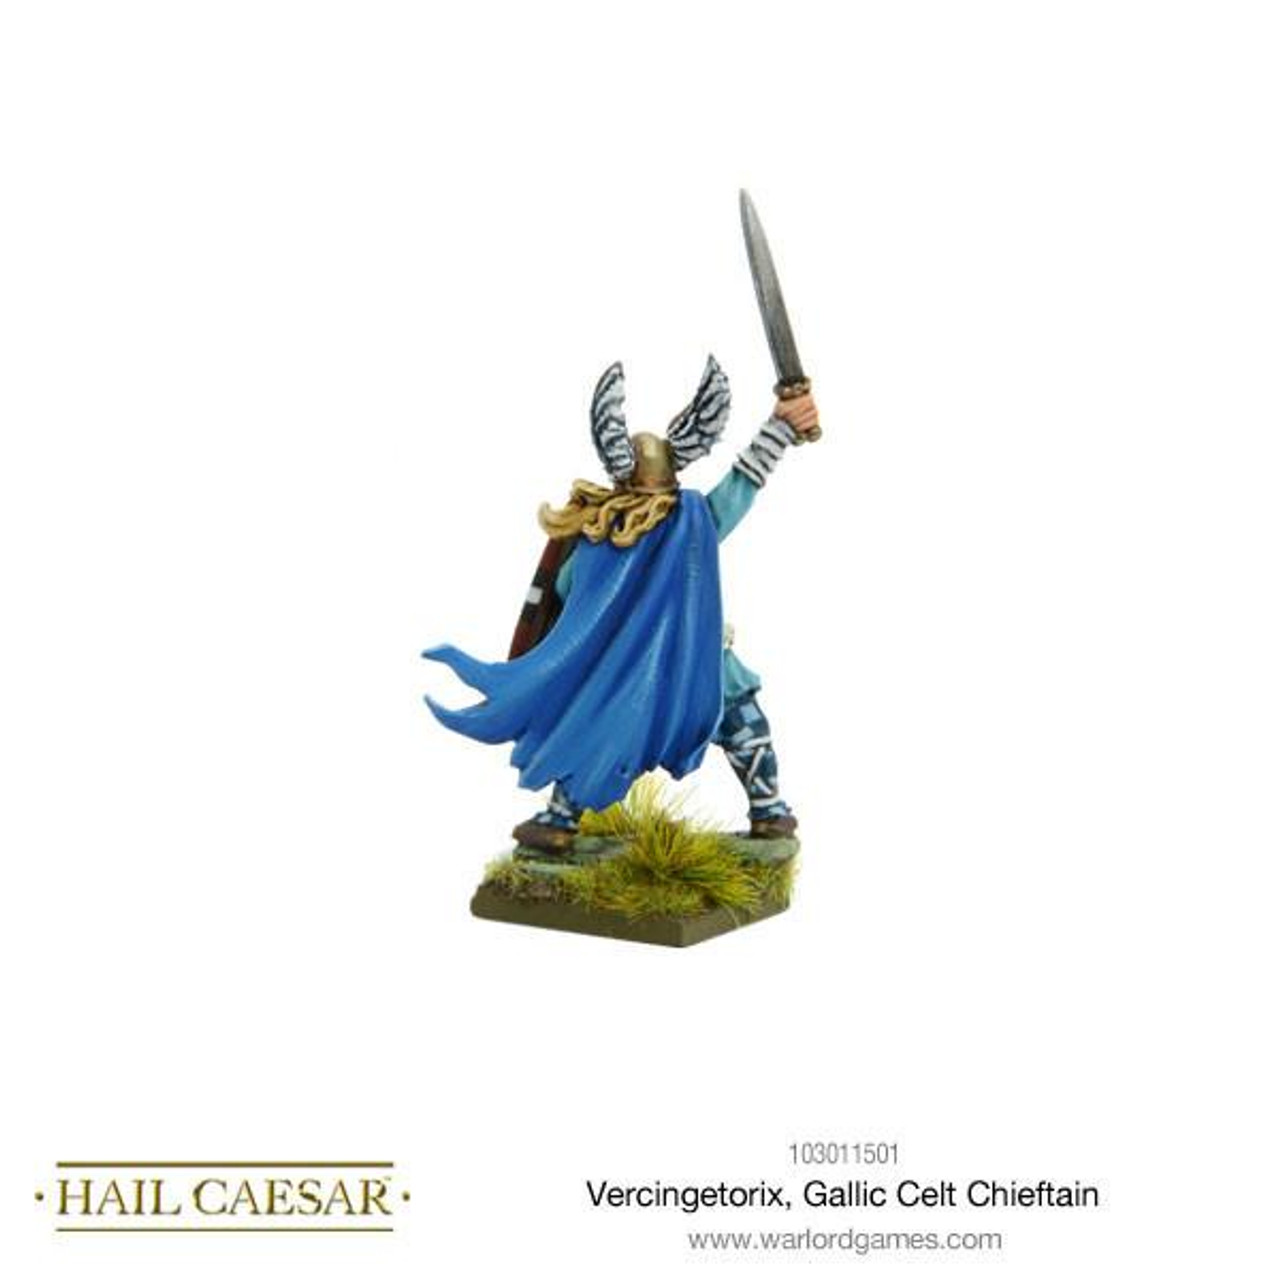 Vercingetorix, Gallic Celt Chieftain - 103011501